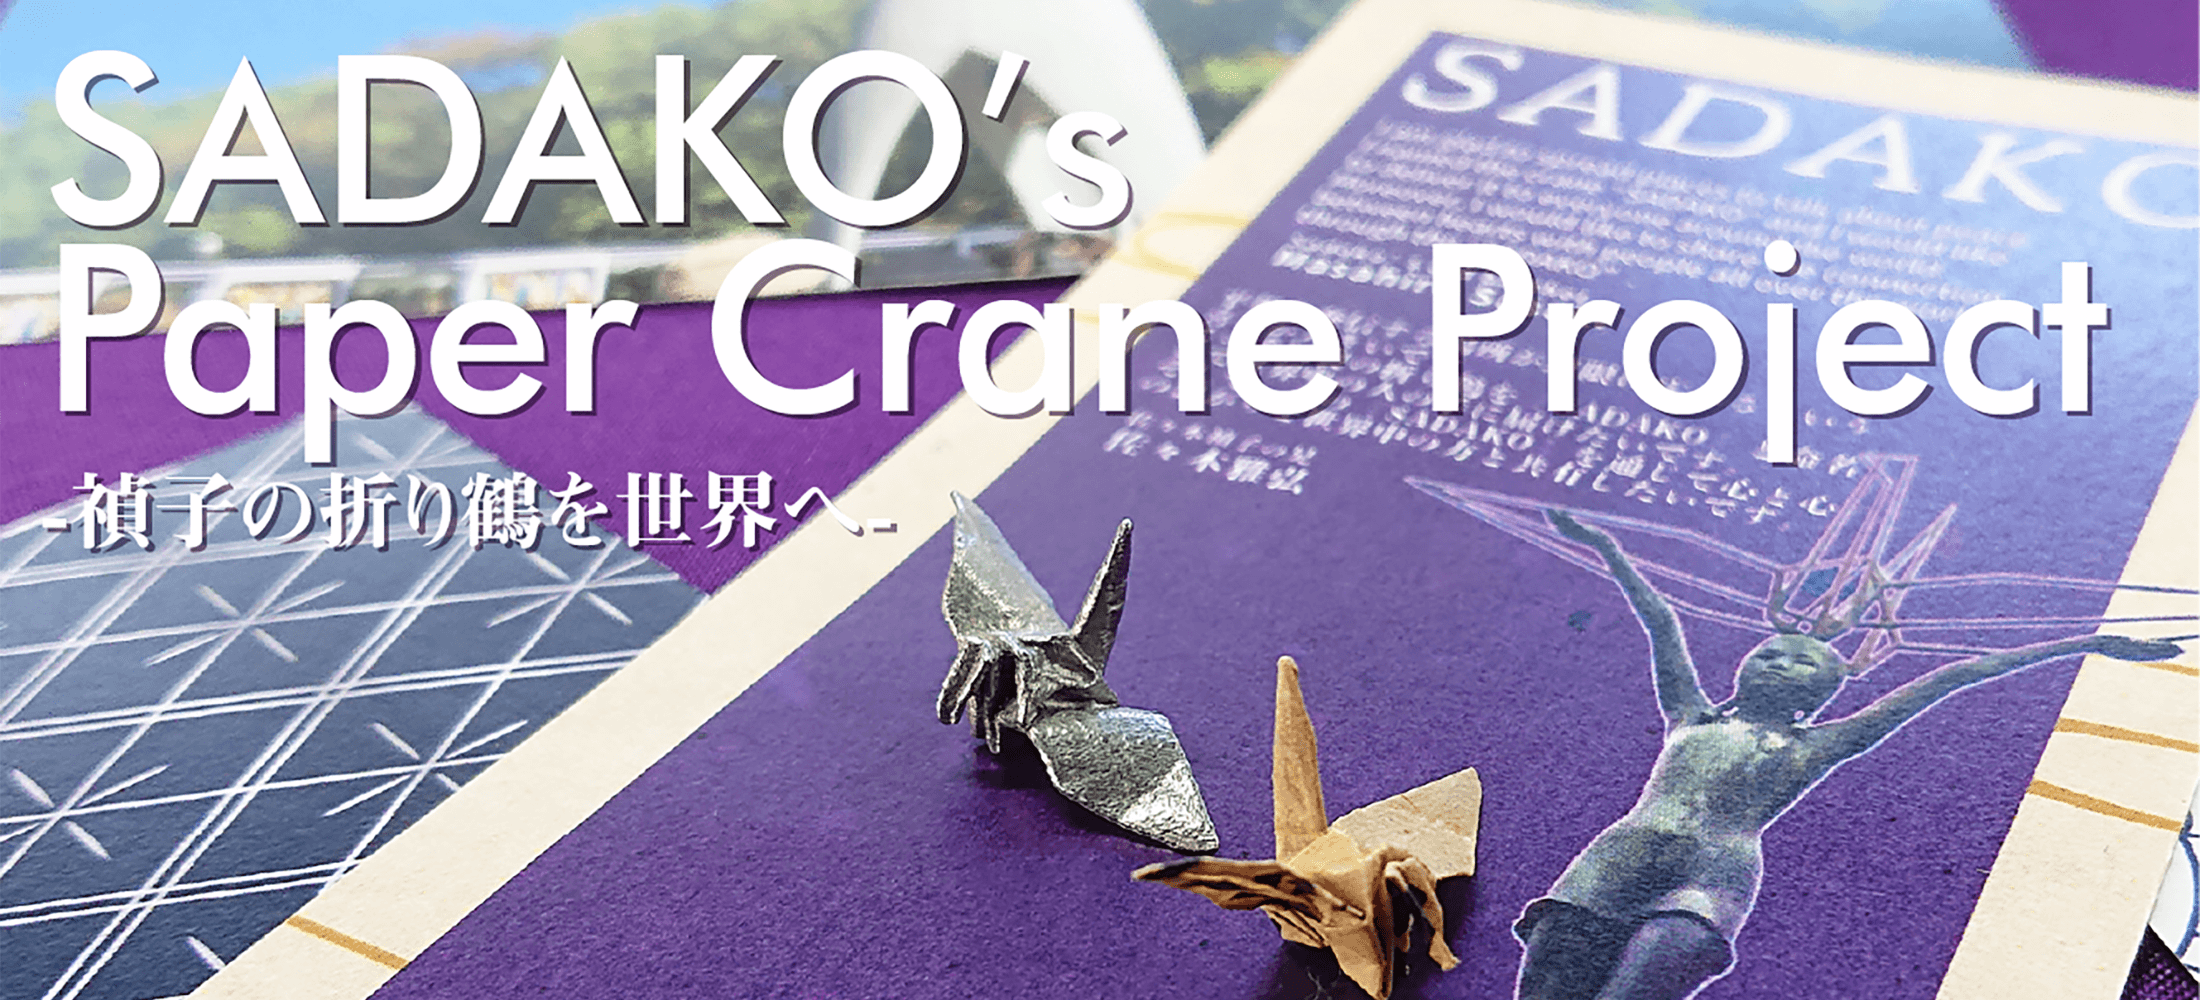 Sadako’s paper cranes